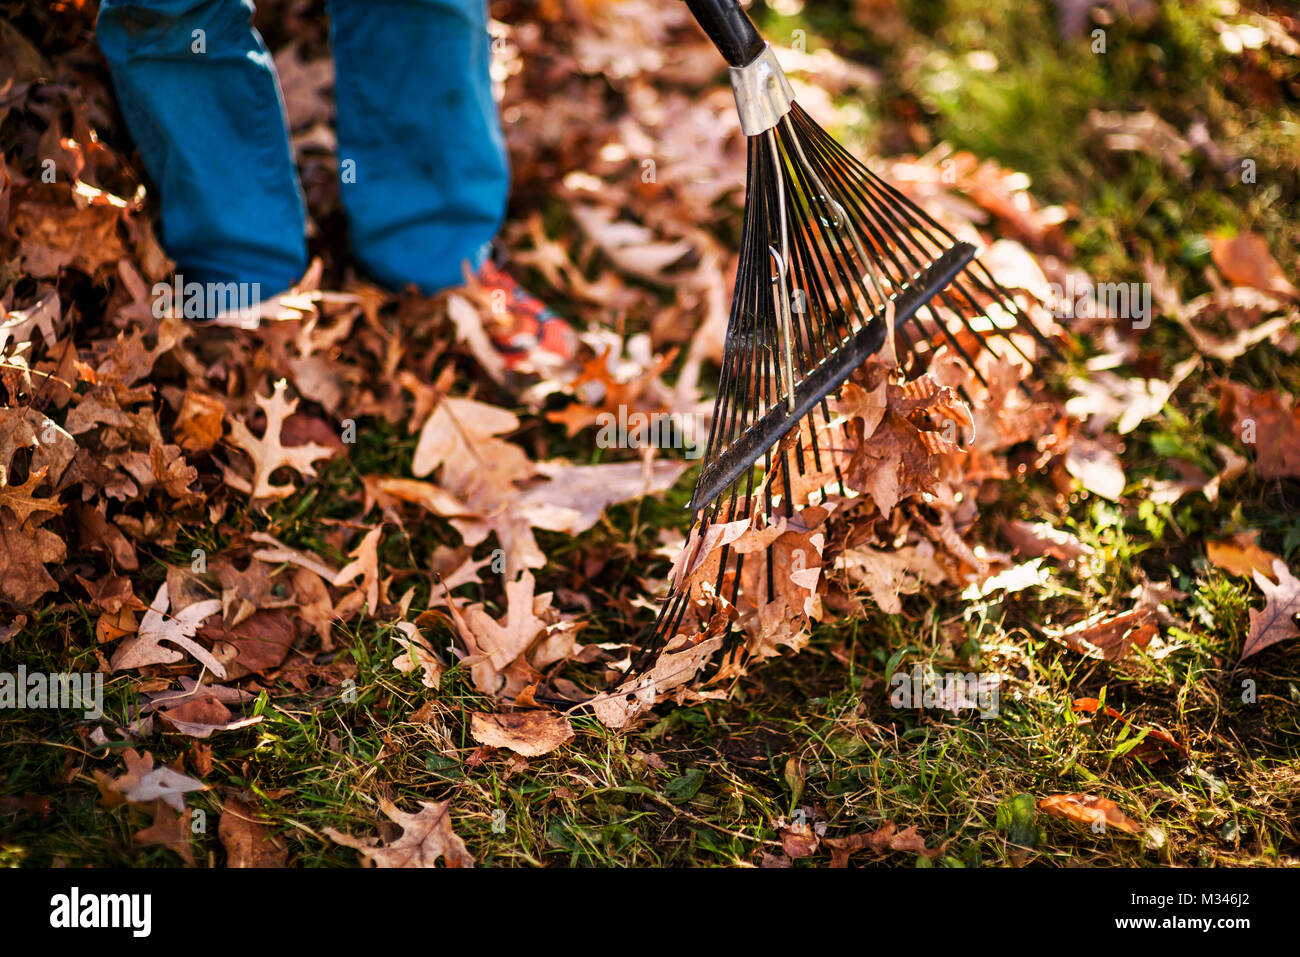 Boy raking autumn leaves Stock Photo